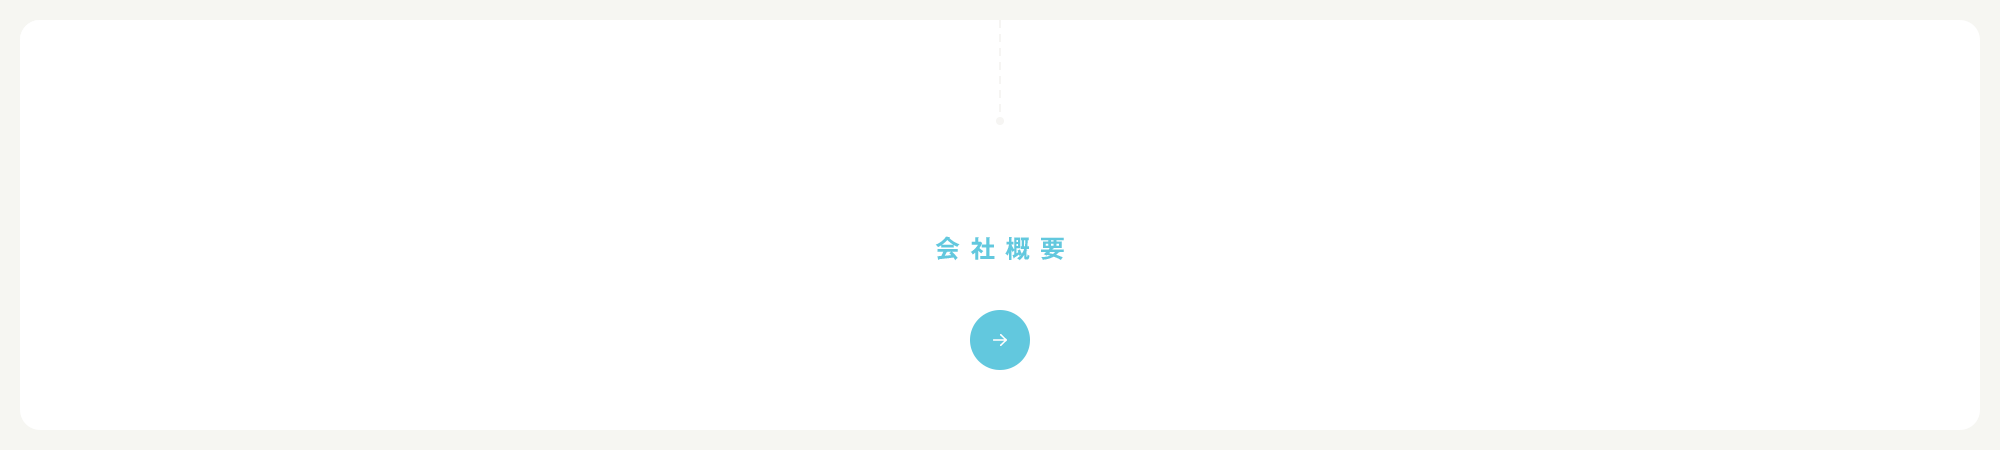 bnr_company_front